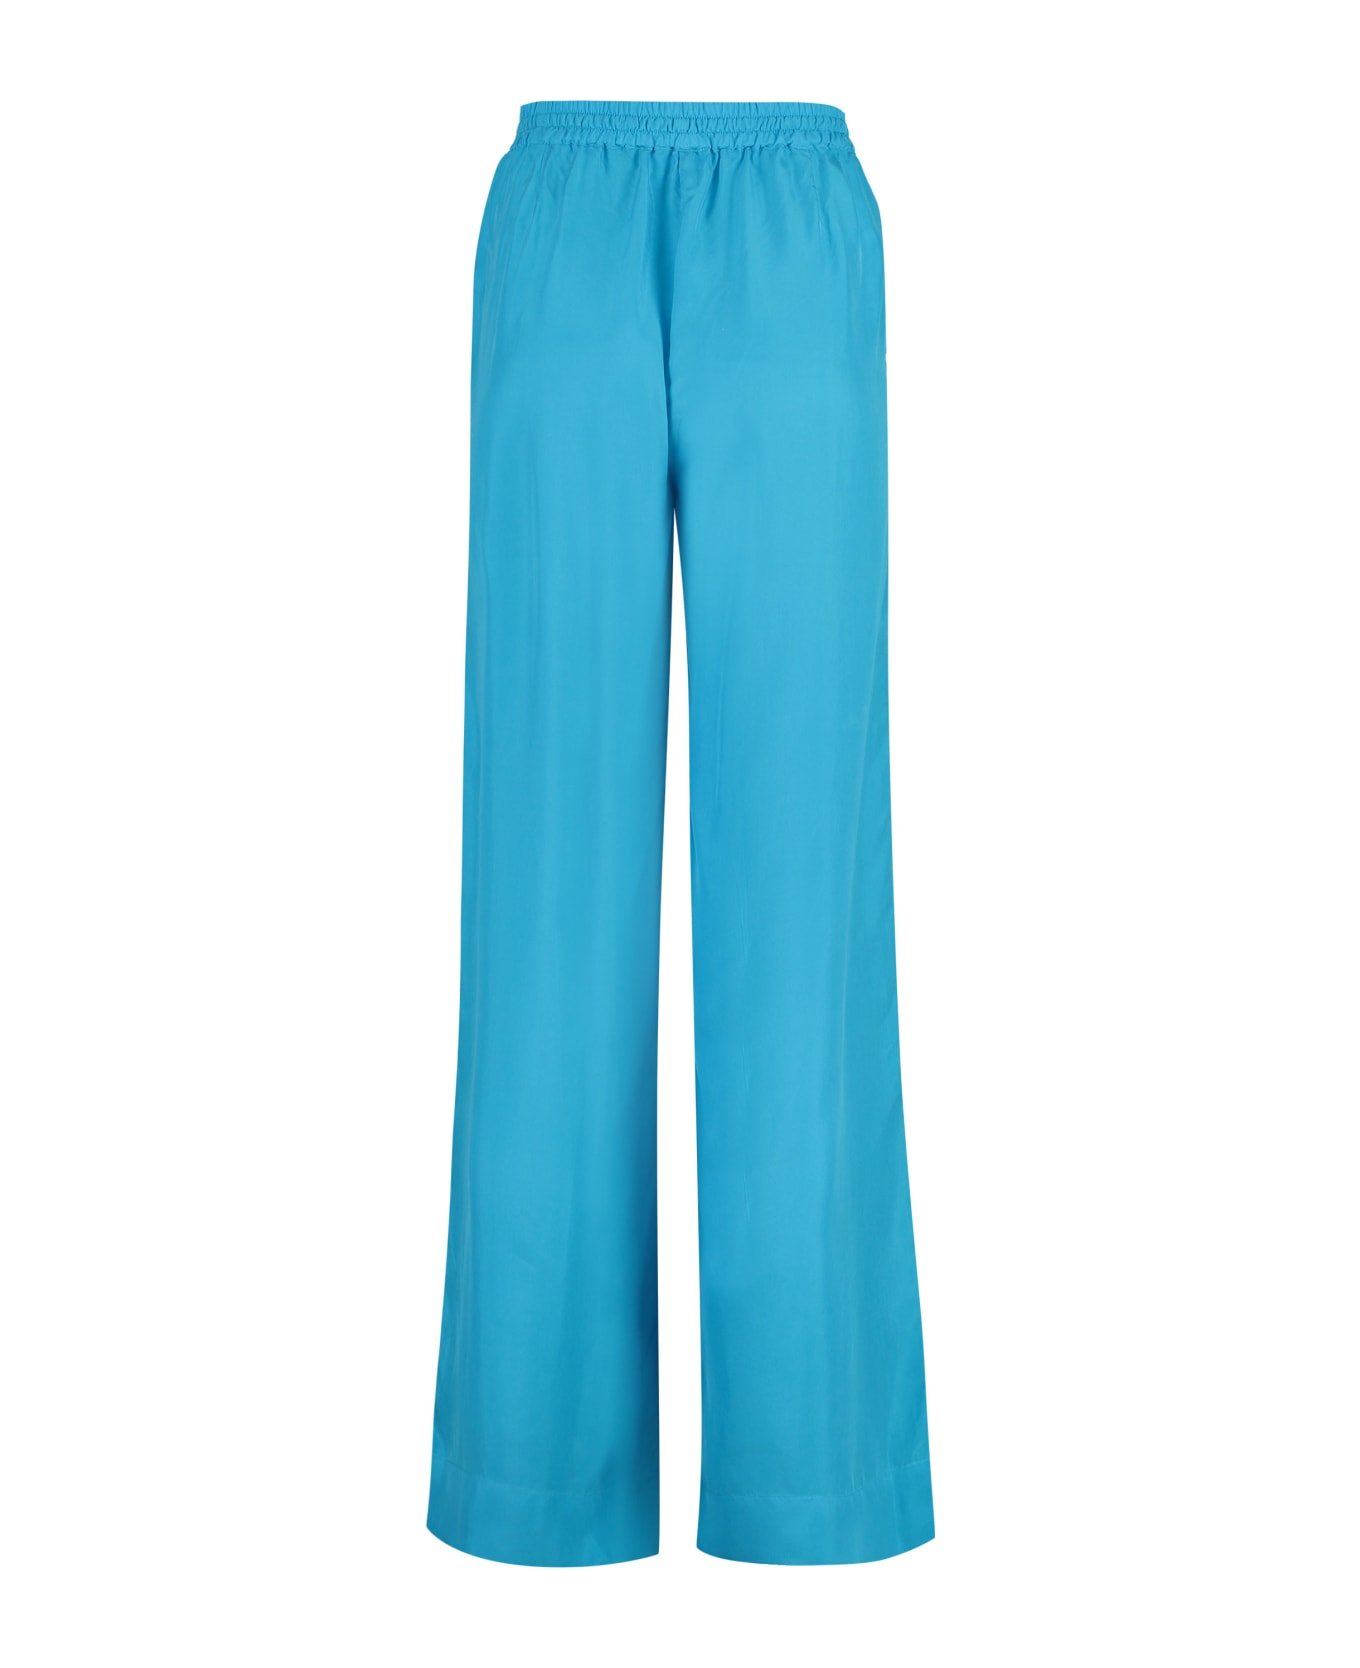 Parosh Silk Maxi Skirt - turquoise